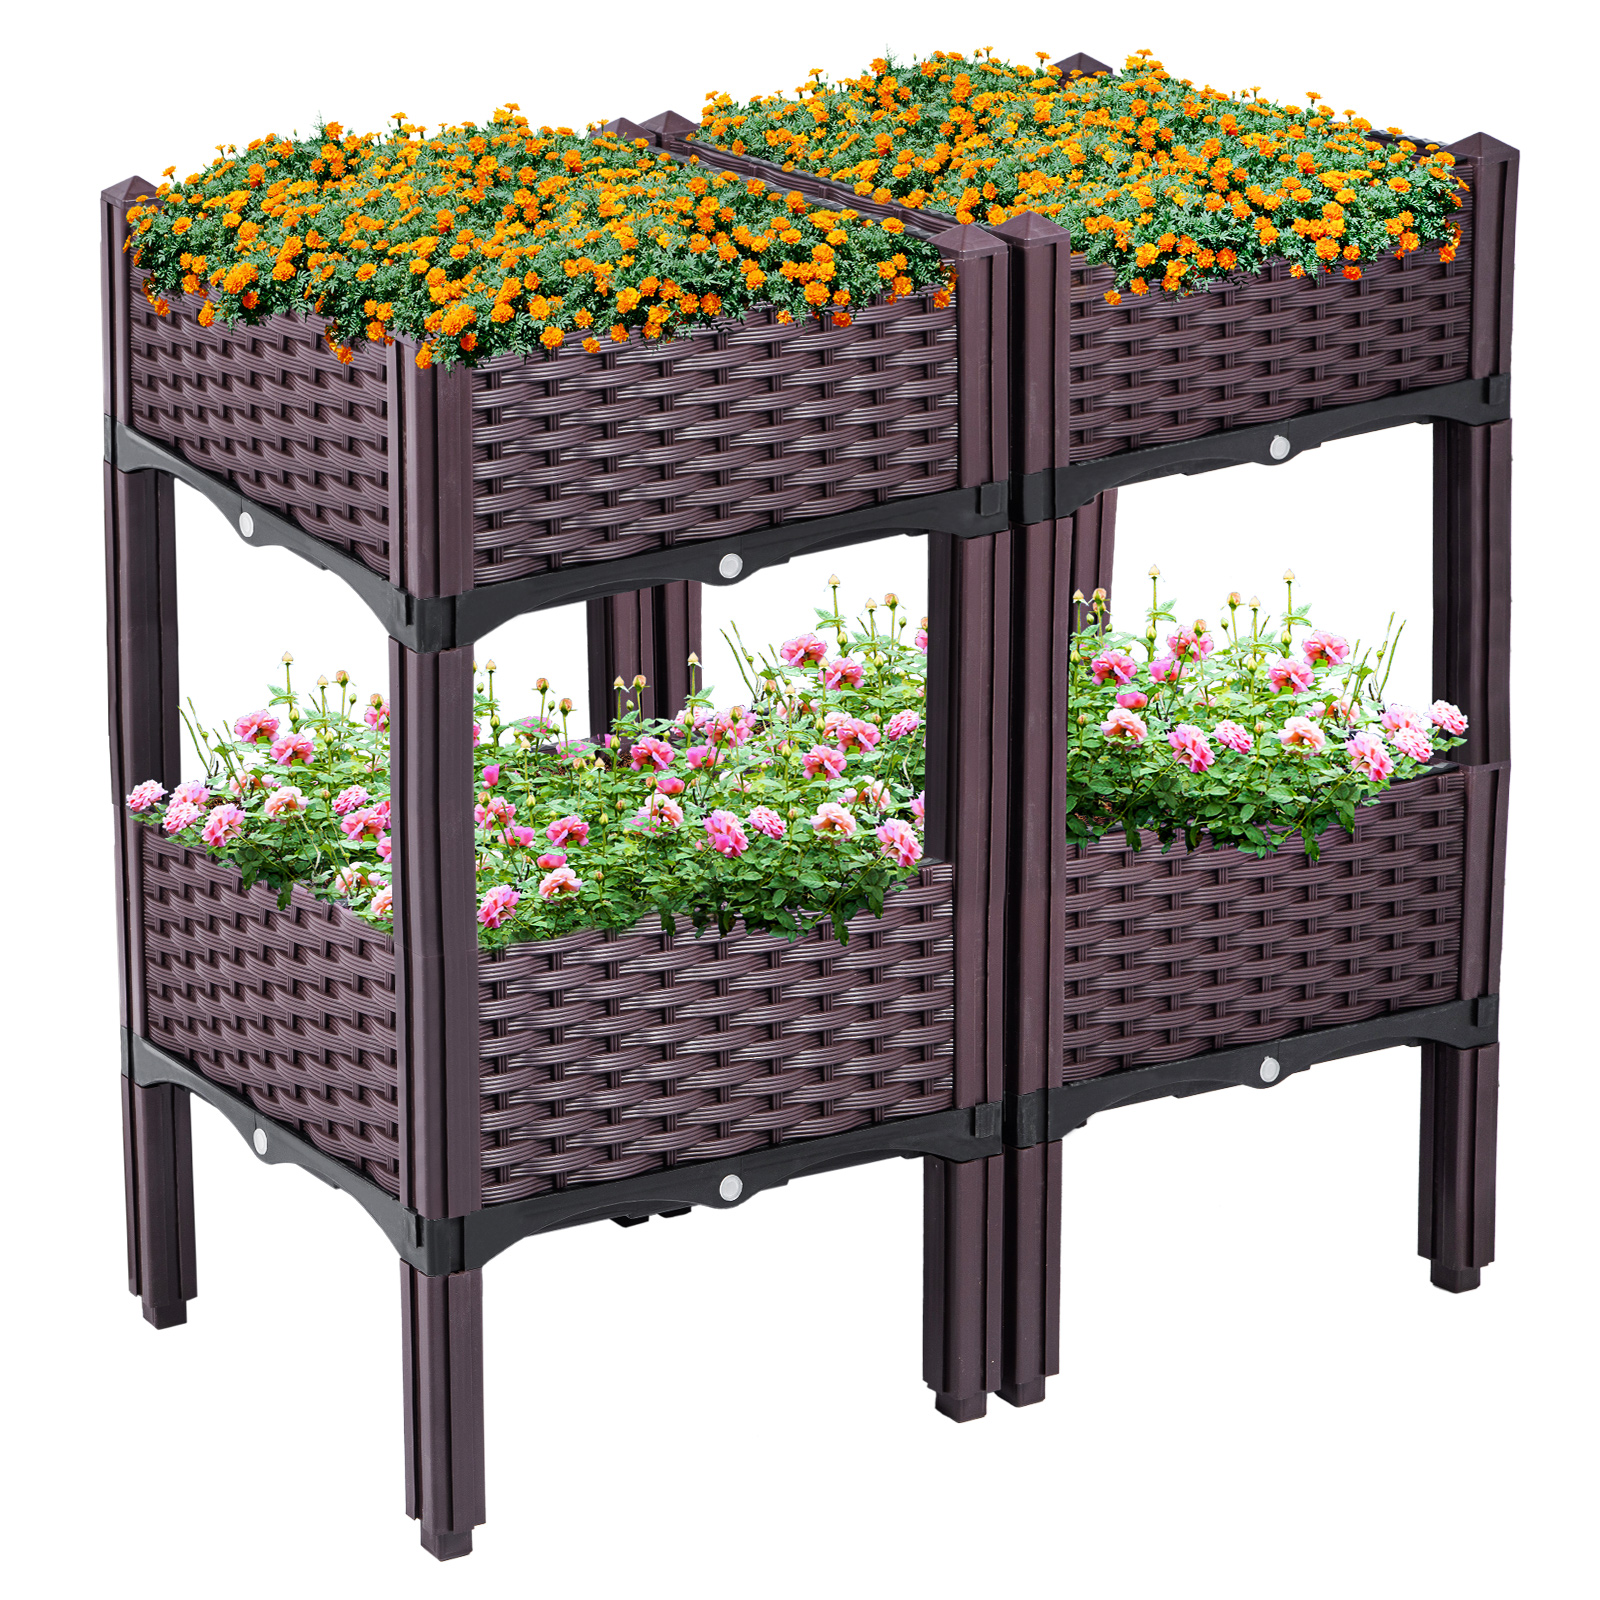 Vevor Plastic Raised Garden Bed Flower Box Kit 9"h Box With Legs Brown Set Of 4 от Vevor Many GEOs